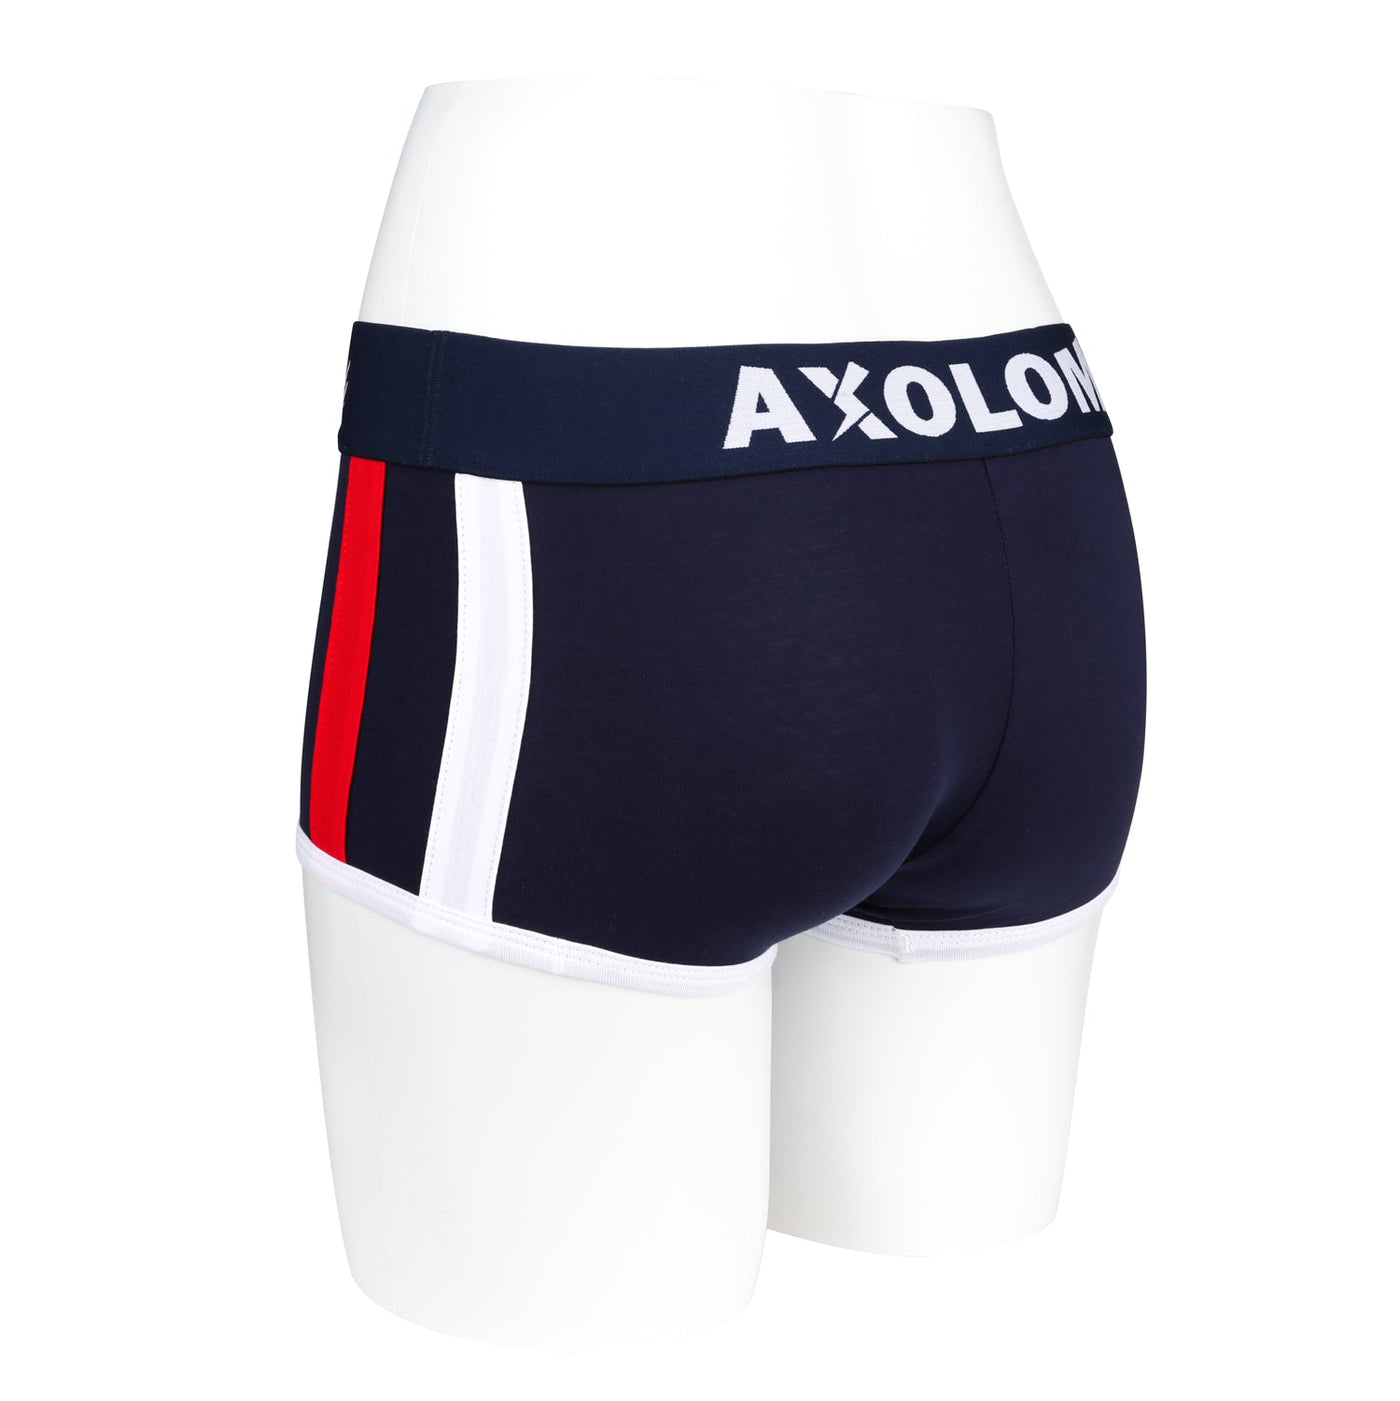 AXOLOM Trunk Underwear - Axolom